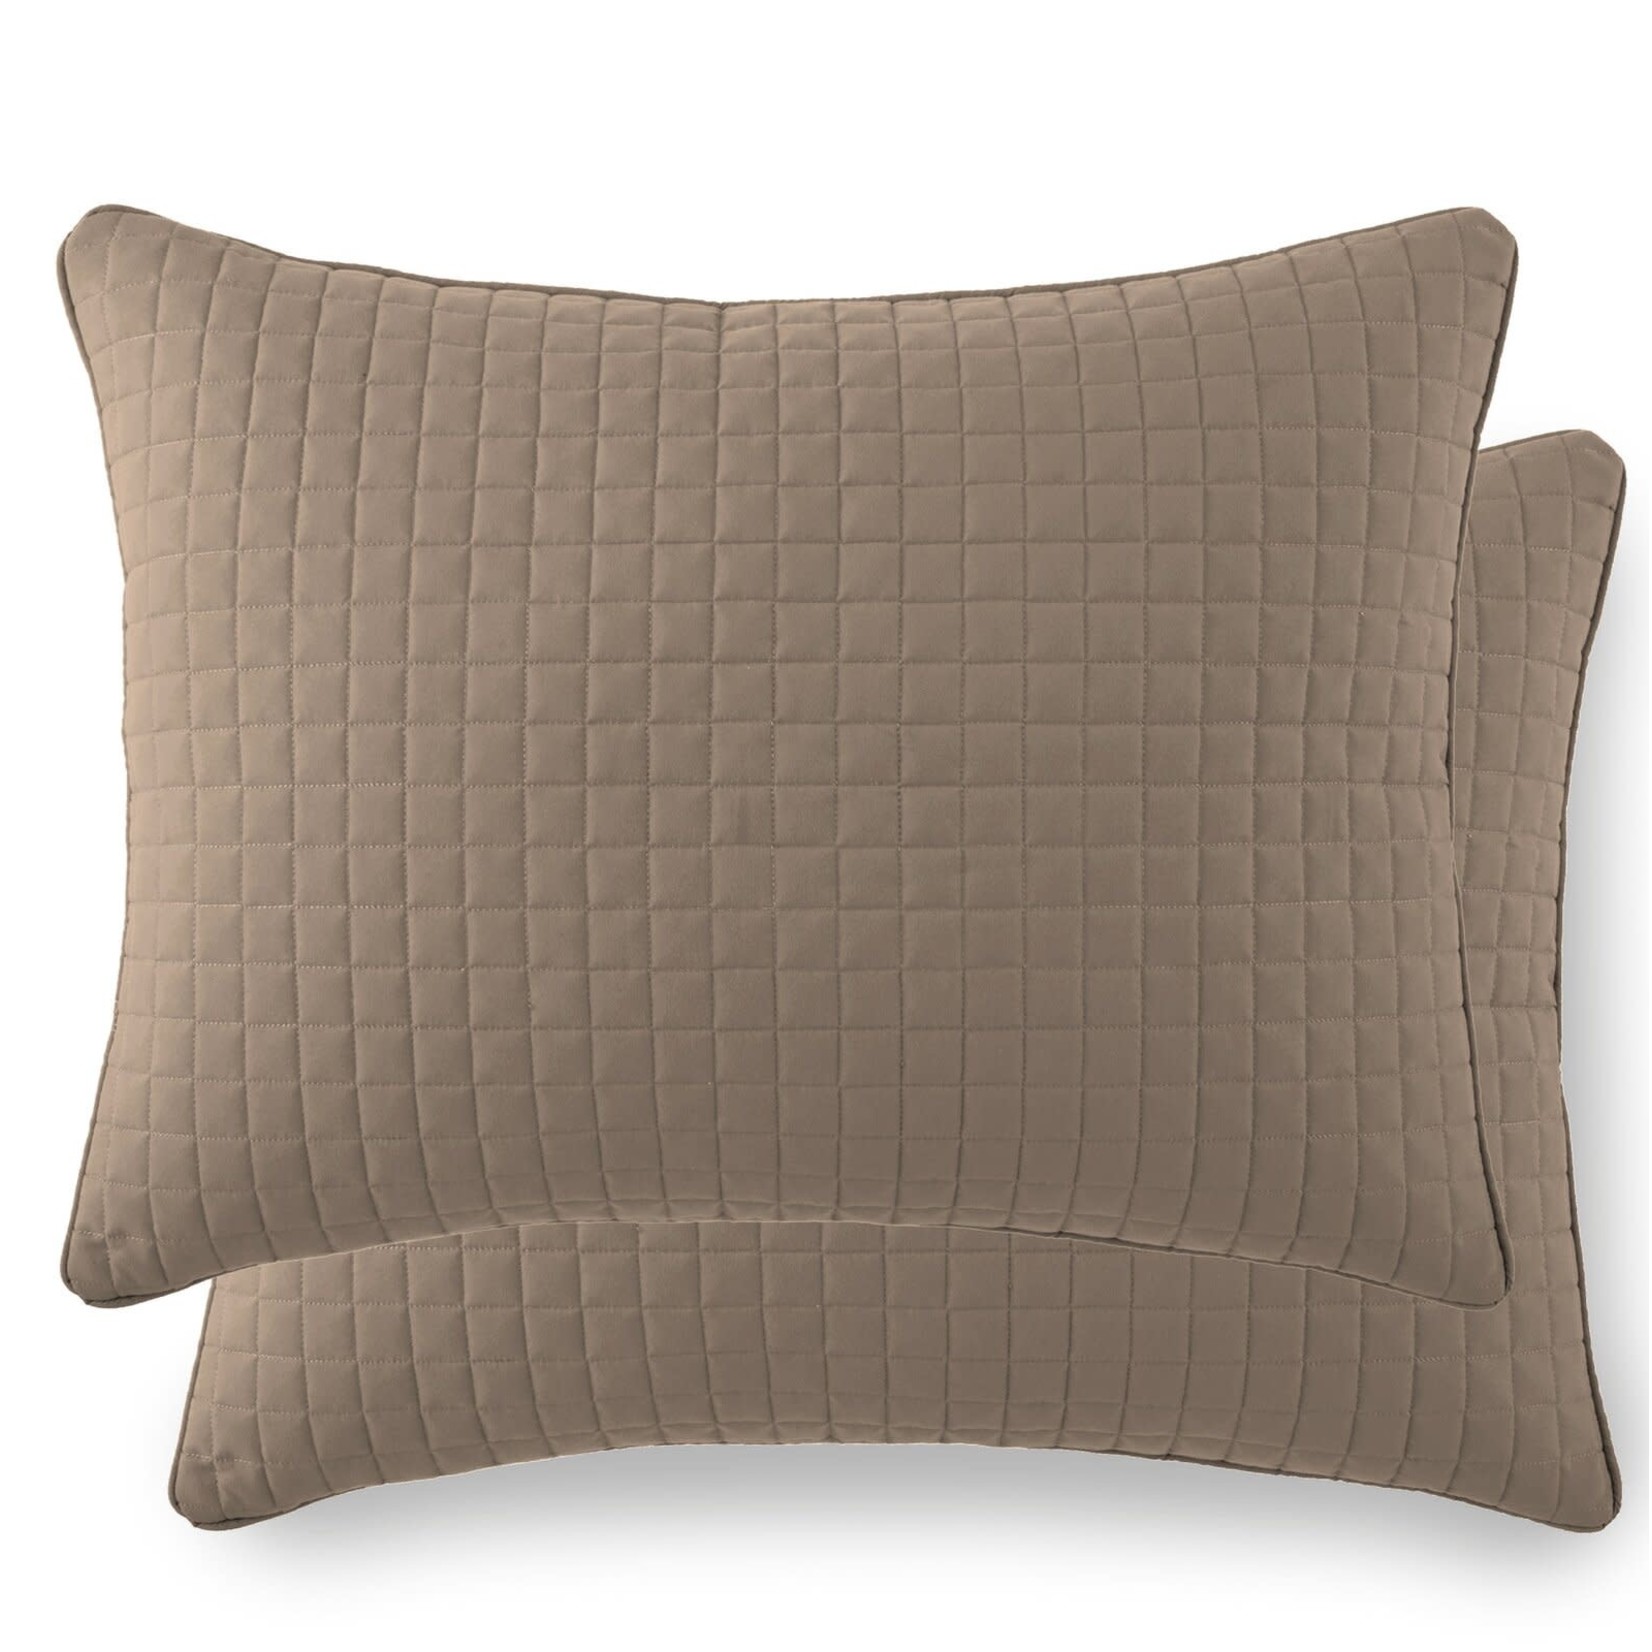 *22" x 22" - Mcquaid Pillow Covers - Set of 2 - Final Sale